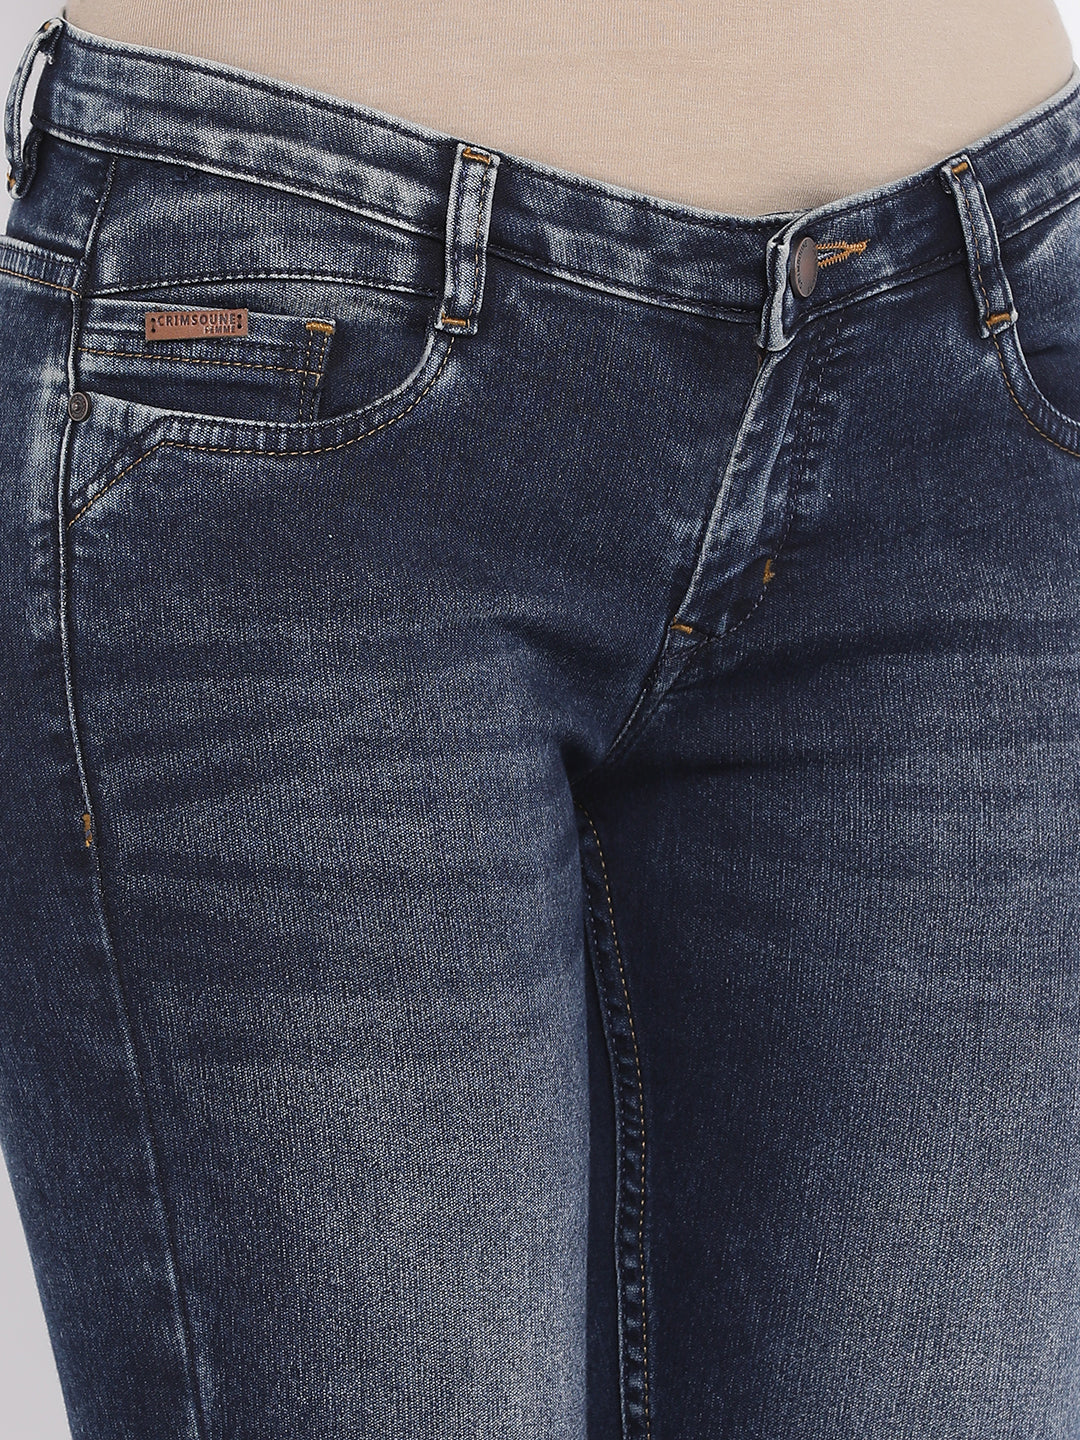 Black Super Skinny Fit Jeans - Women Jeans